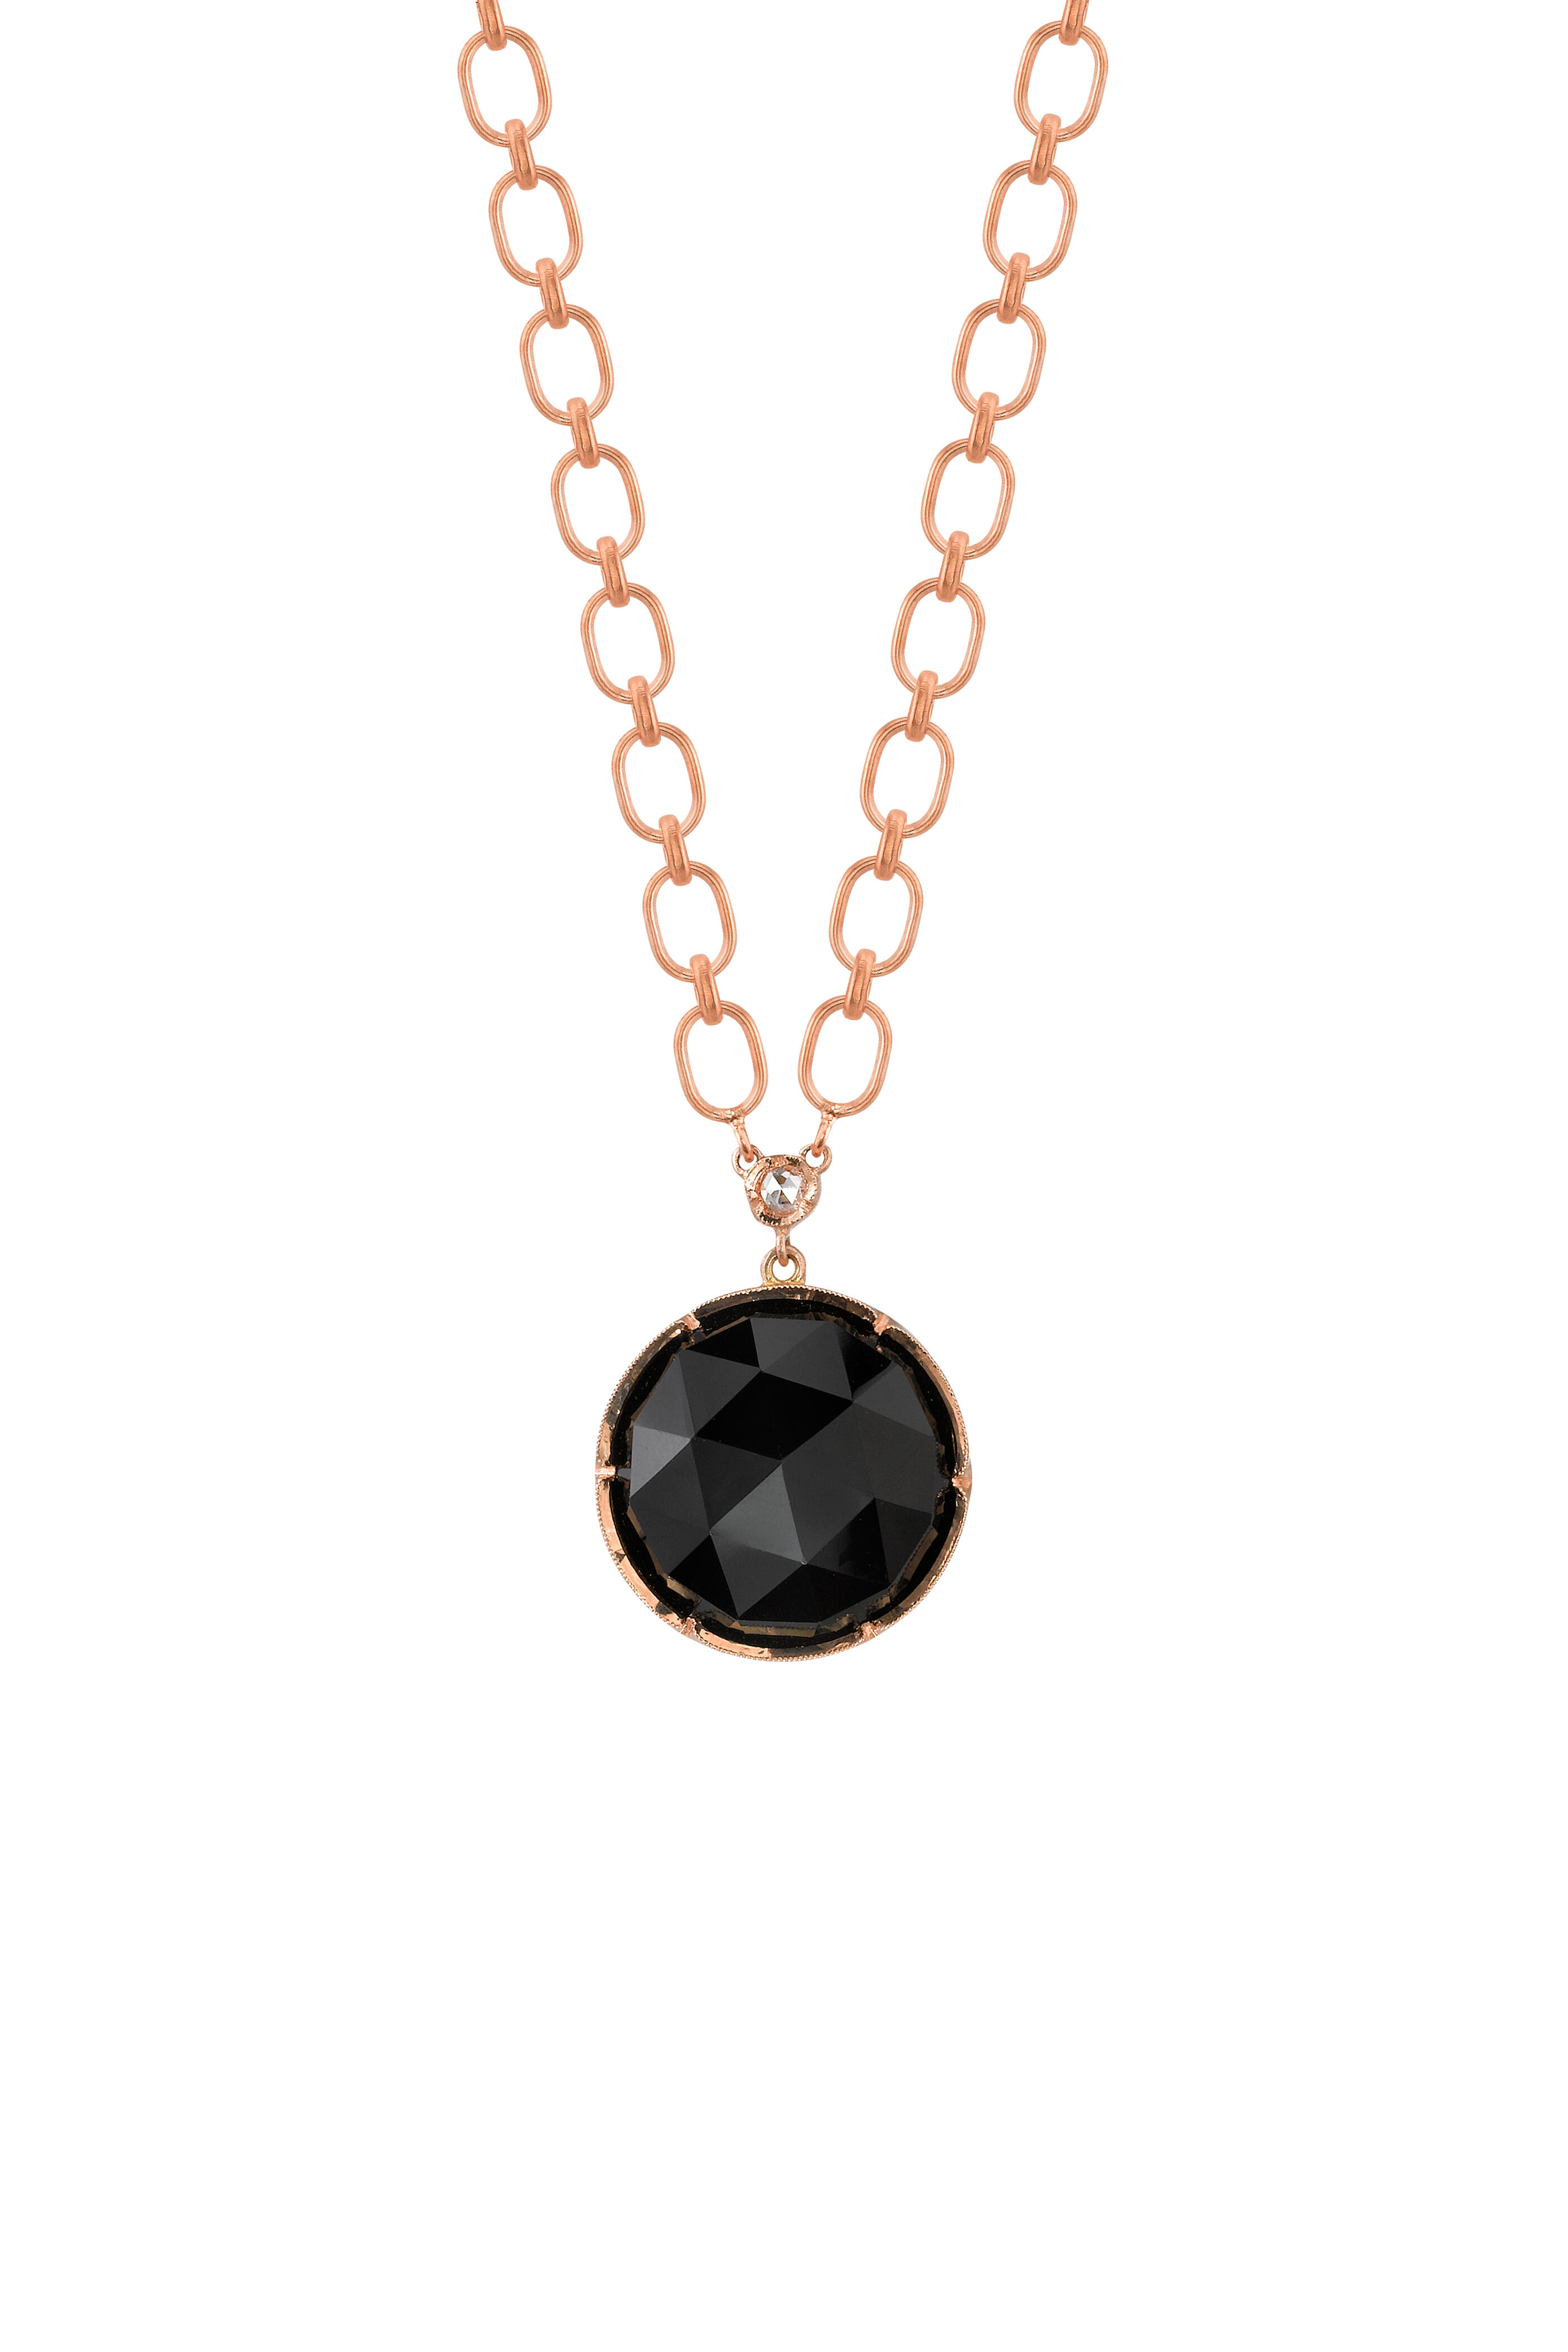 WMNS Large Cut Black Onyx Stone Pendant on Black Rope Necklace / Black